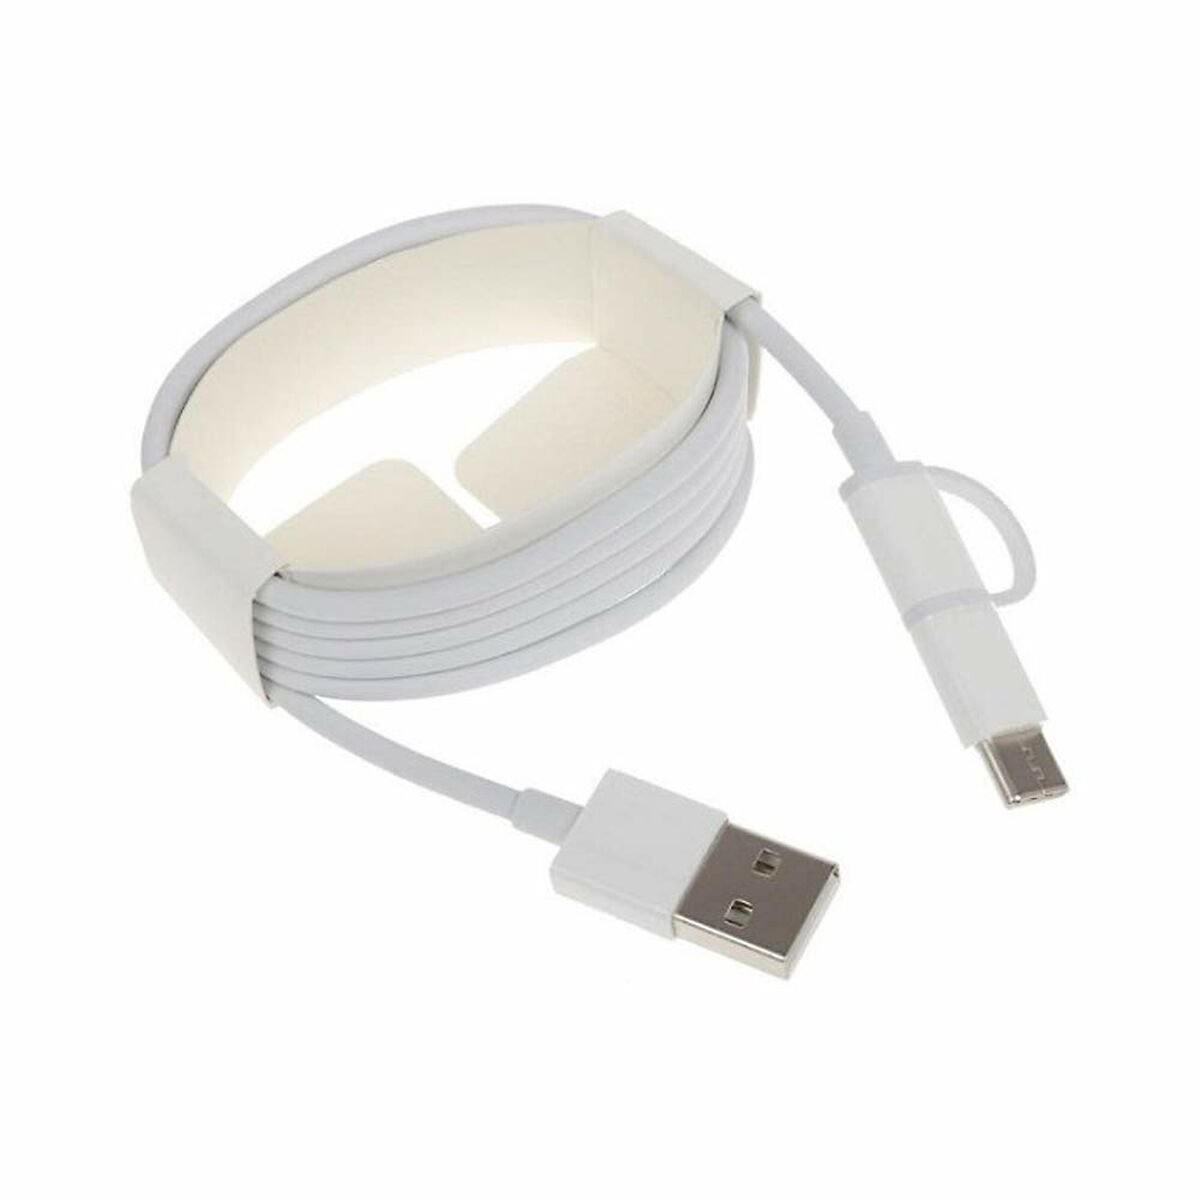 Cavo Micro USB Xiaomi Mi 2-in-1 USB Cable (Micro USB to Type C) 100cm Bianco 1 m